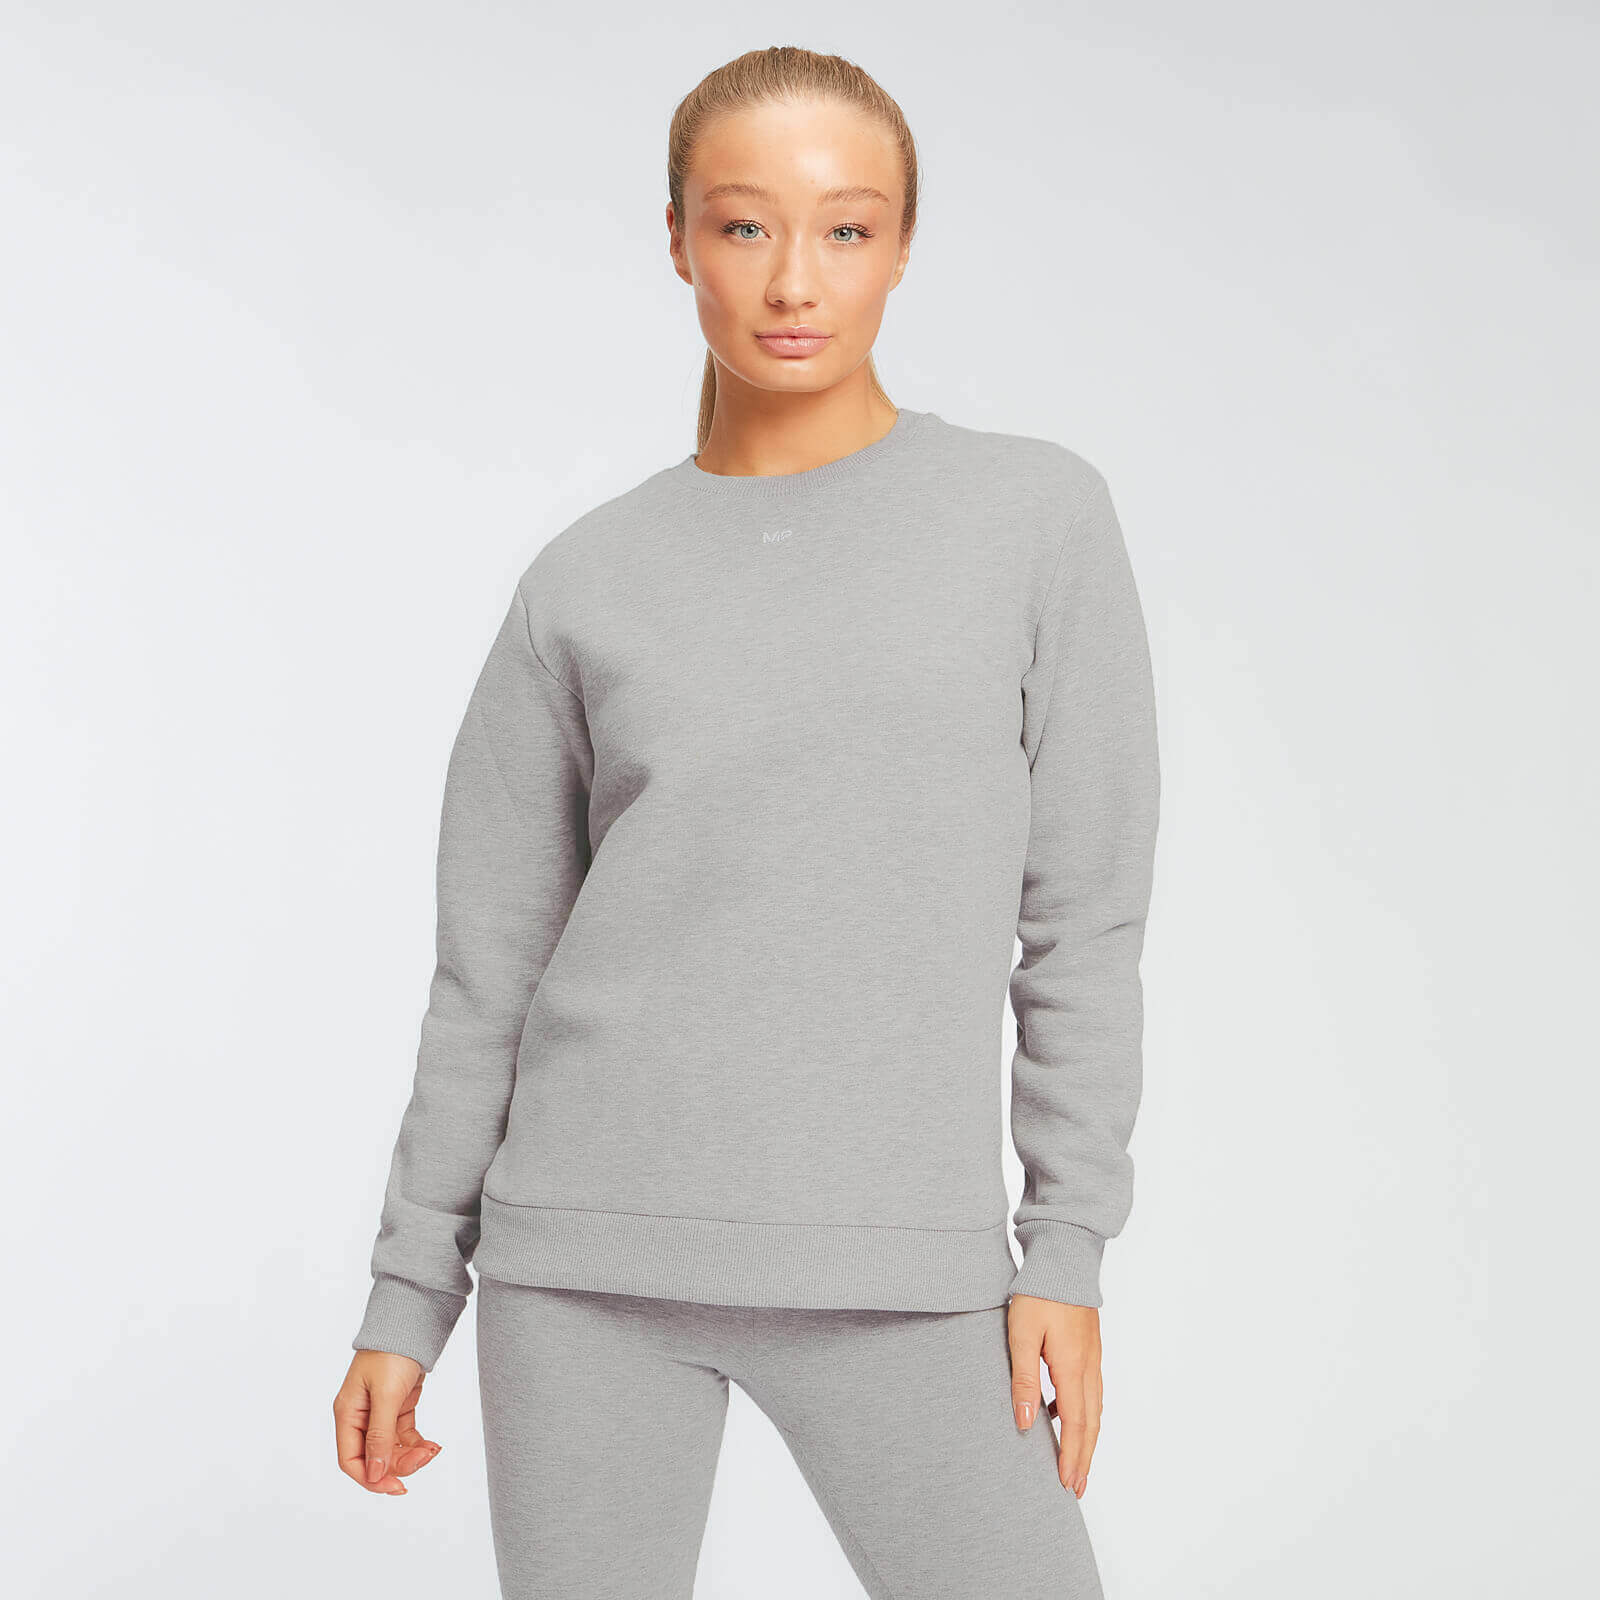 Sweatshirt Essentials da MP para Senhora - Grey Marl - S